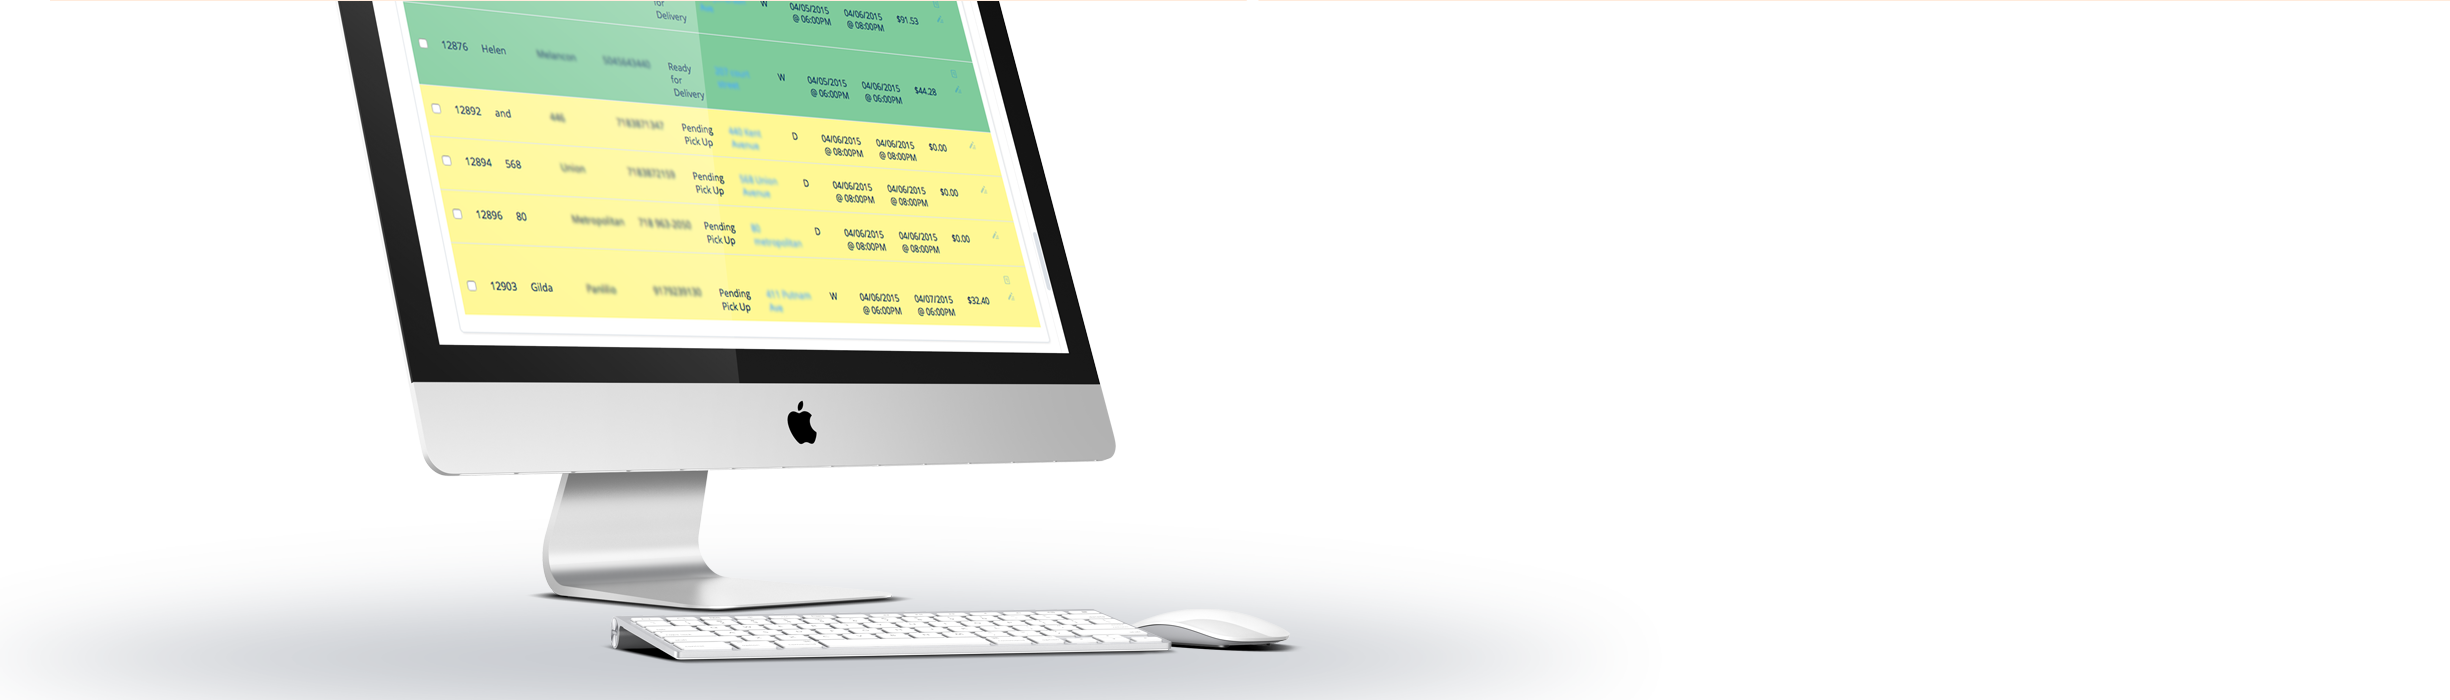 Mac computer with WashClubTrak software